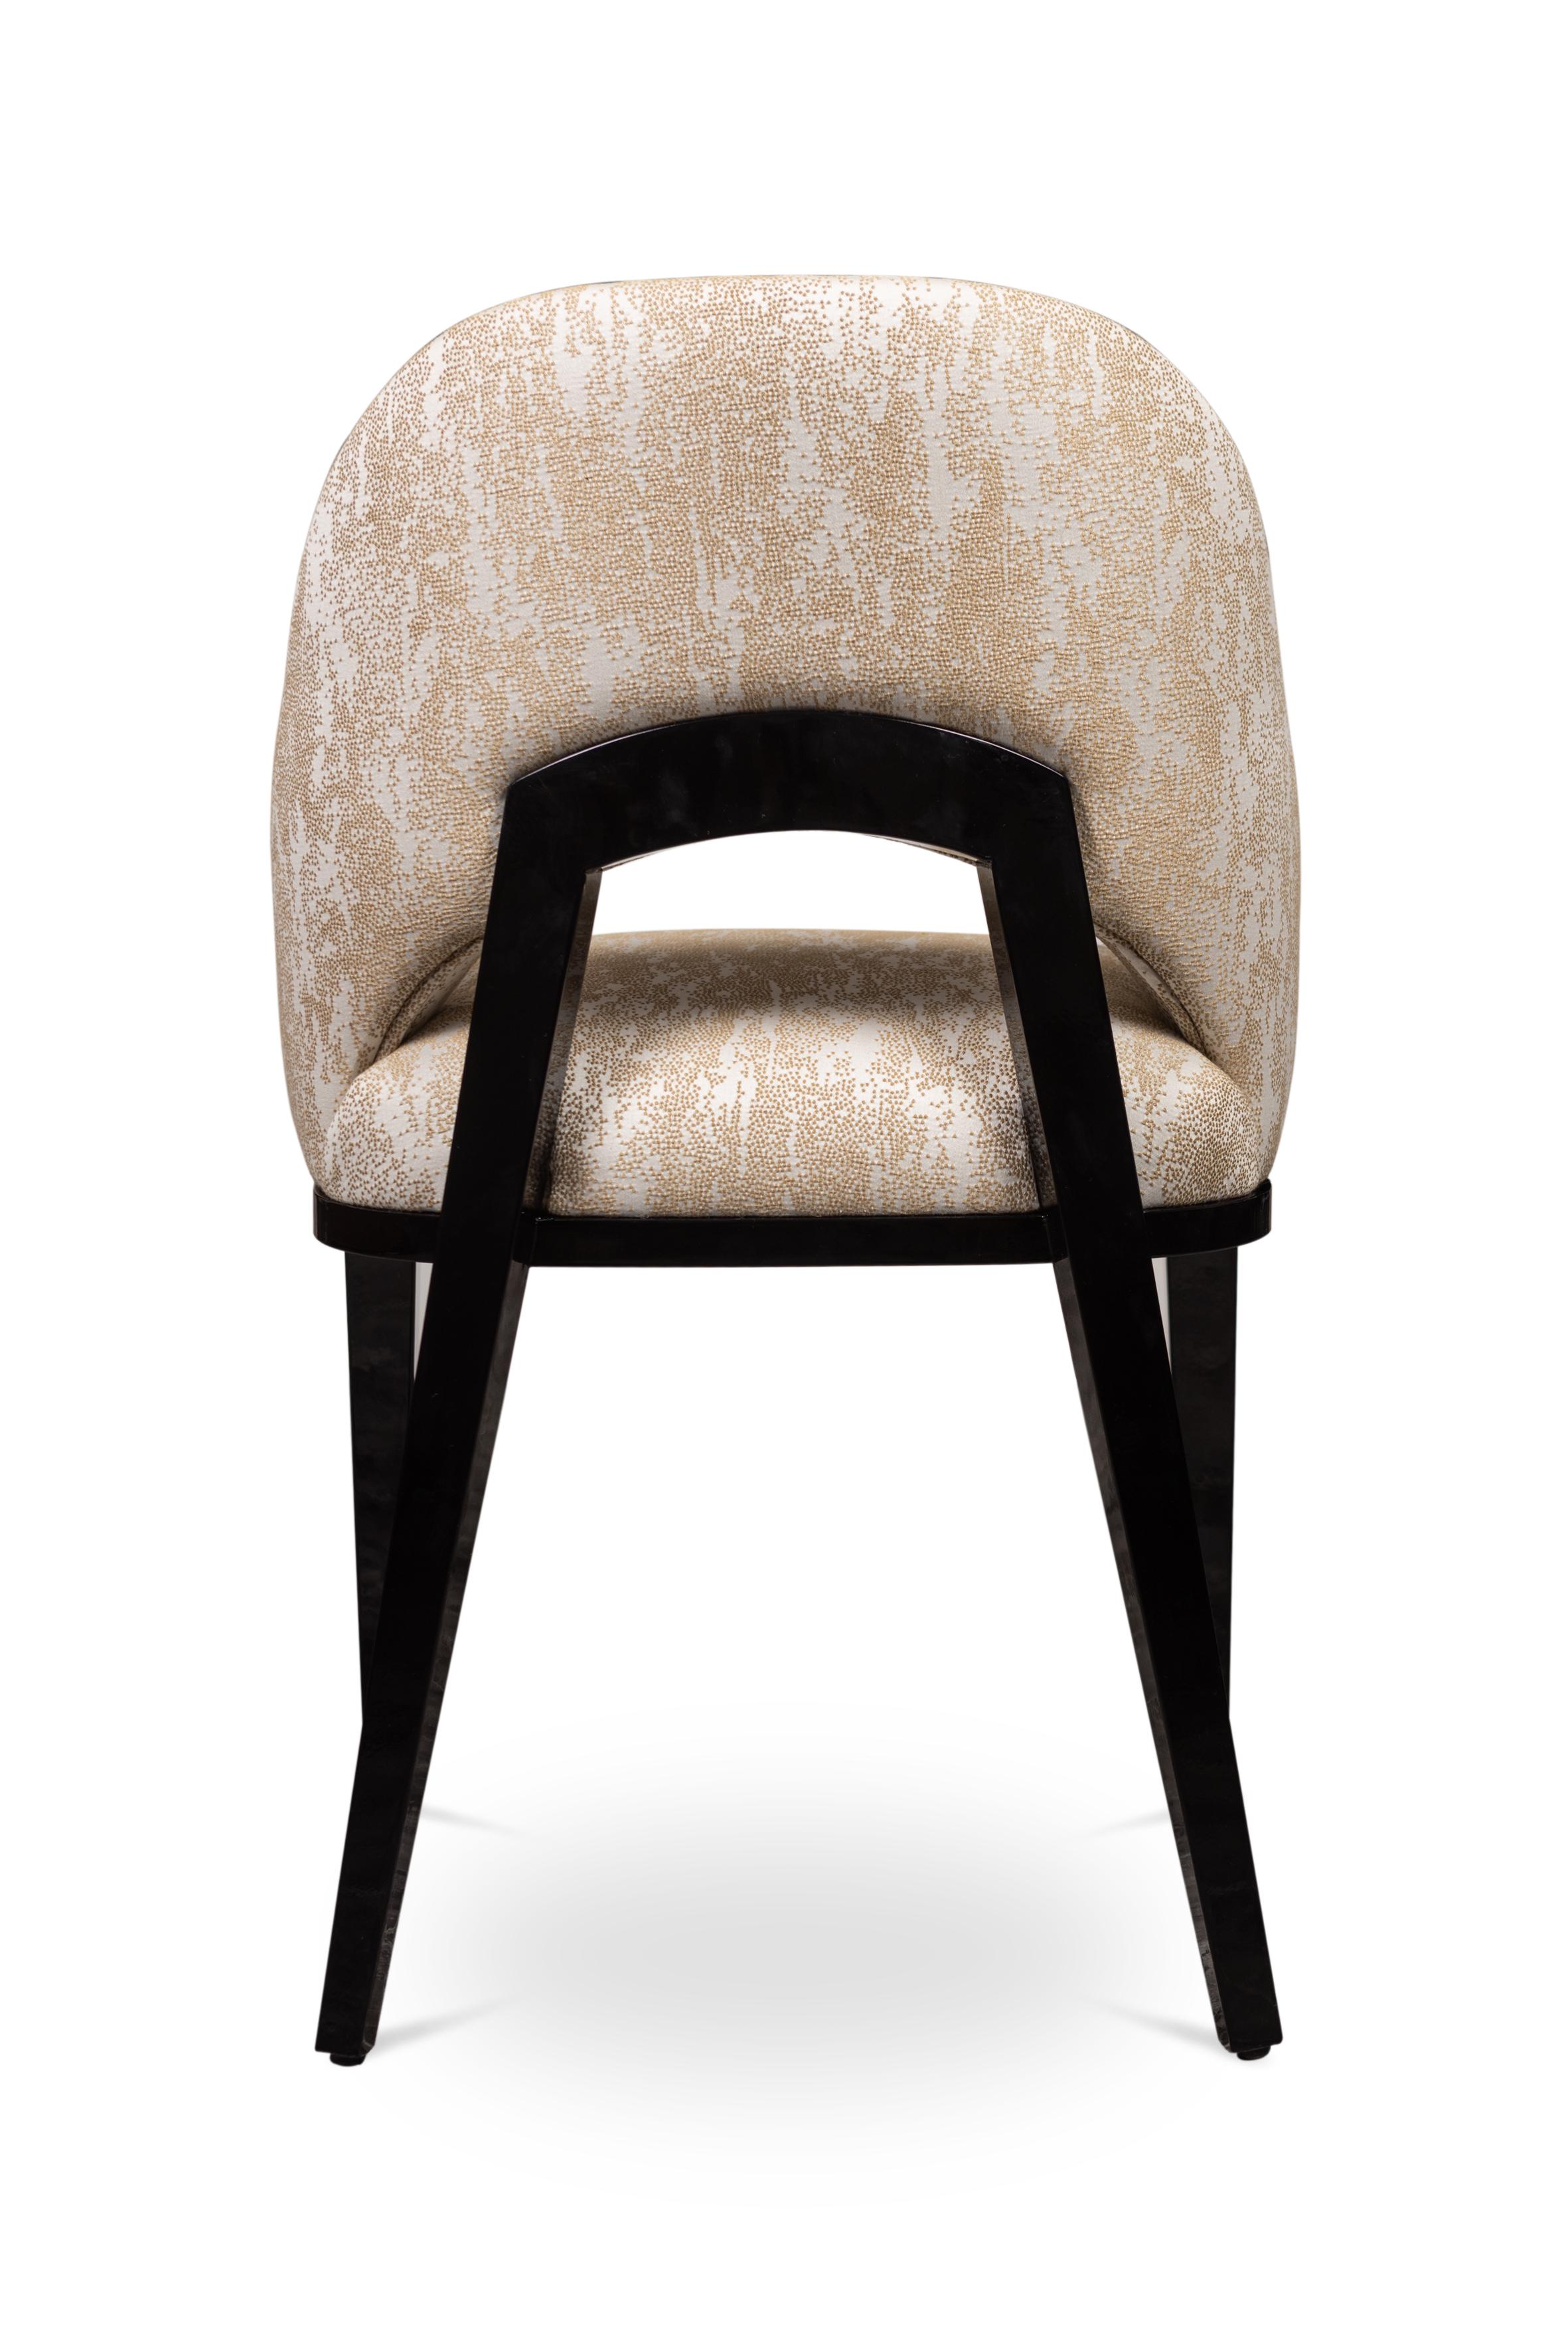 Portuguese Wonder Dining Chair by Memoir Essence For Sale